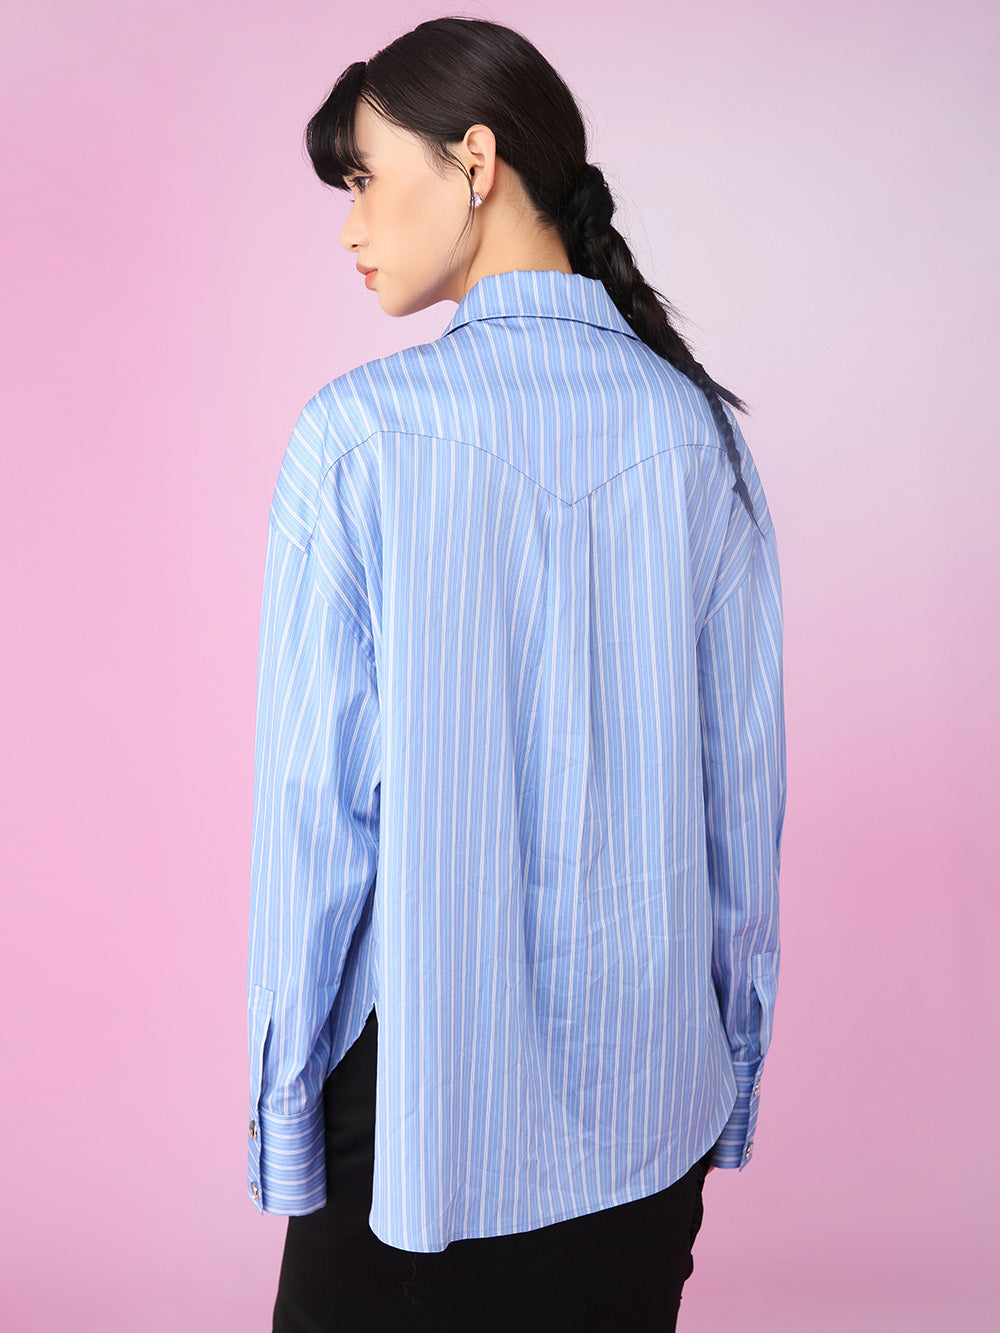 MUKZIN Lapel Stripe Long Classic High-quantity Shirts